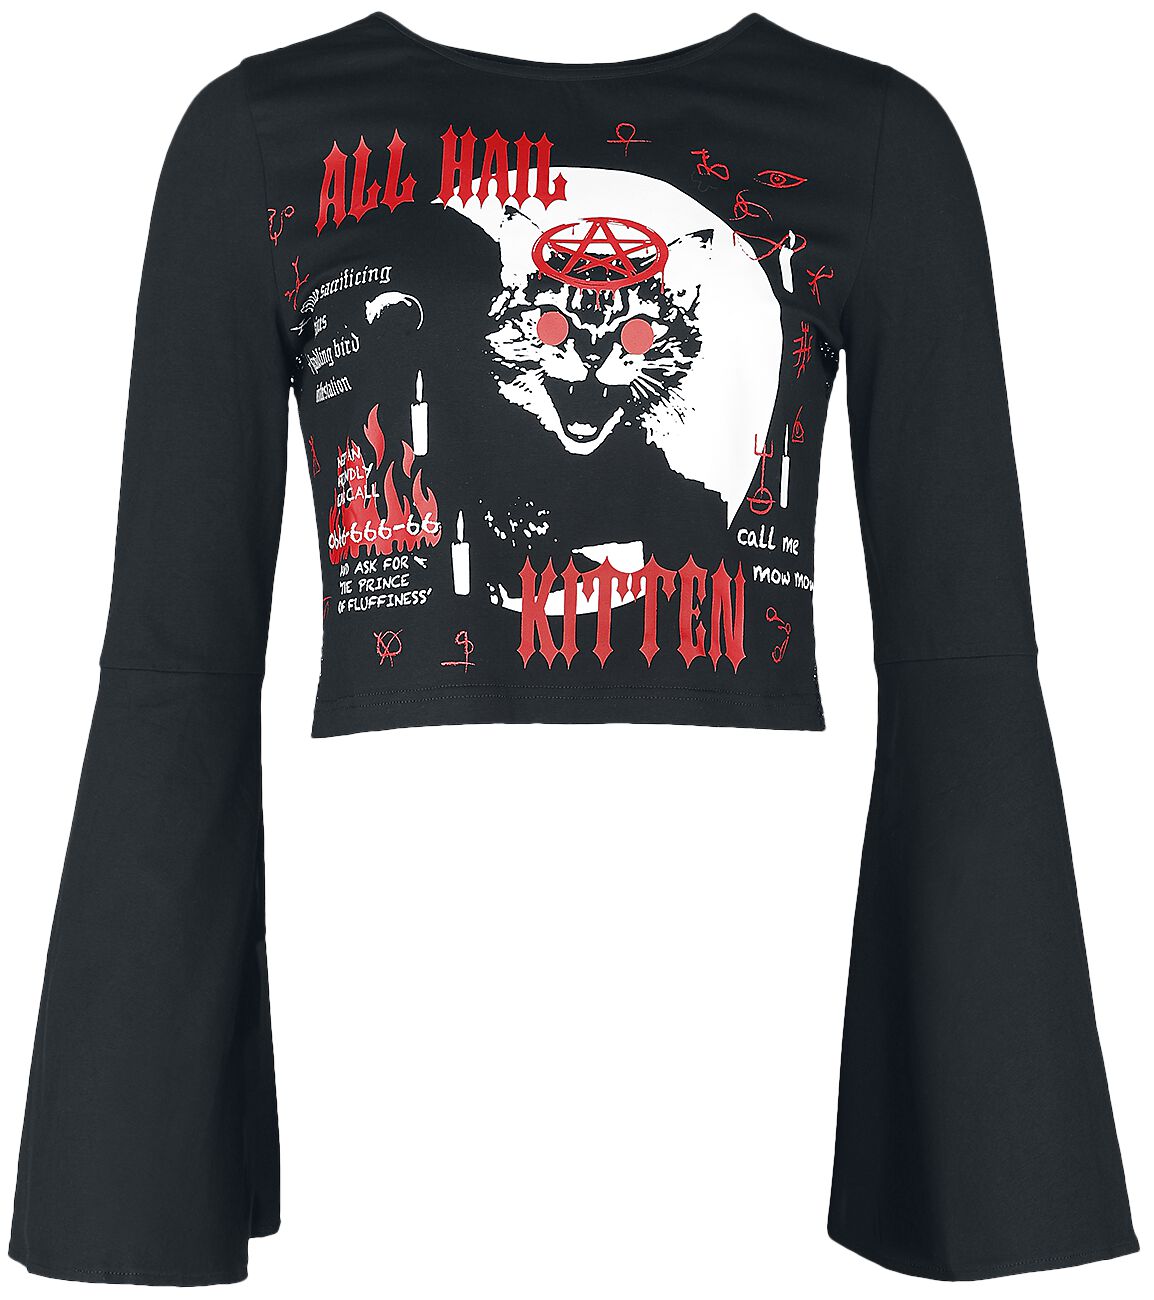 T-shirt manches longues Gothic de Jawbreaker - Hall Kitten Crop top with bell sleeves - XS à XXL - p